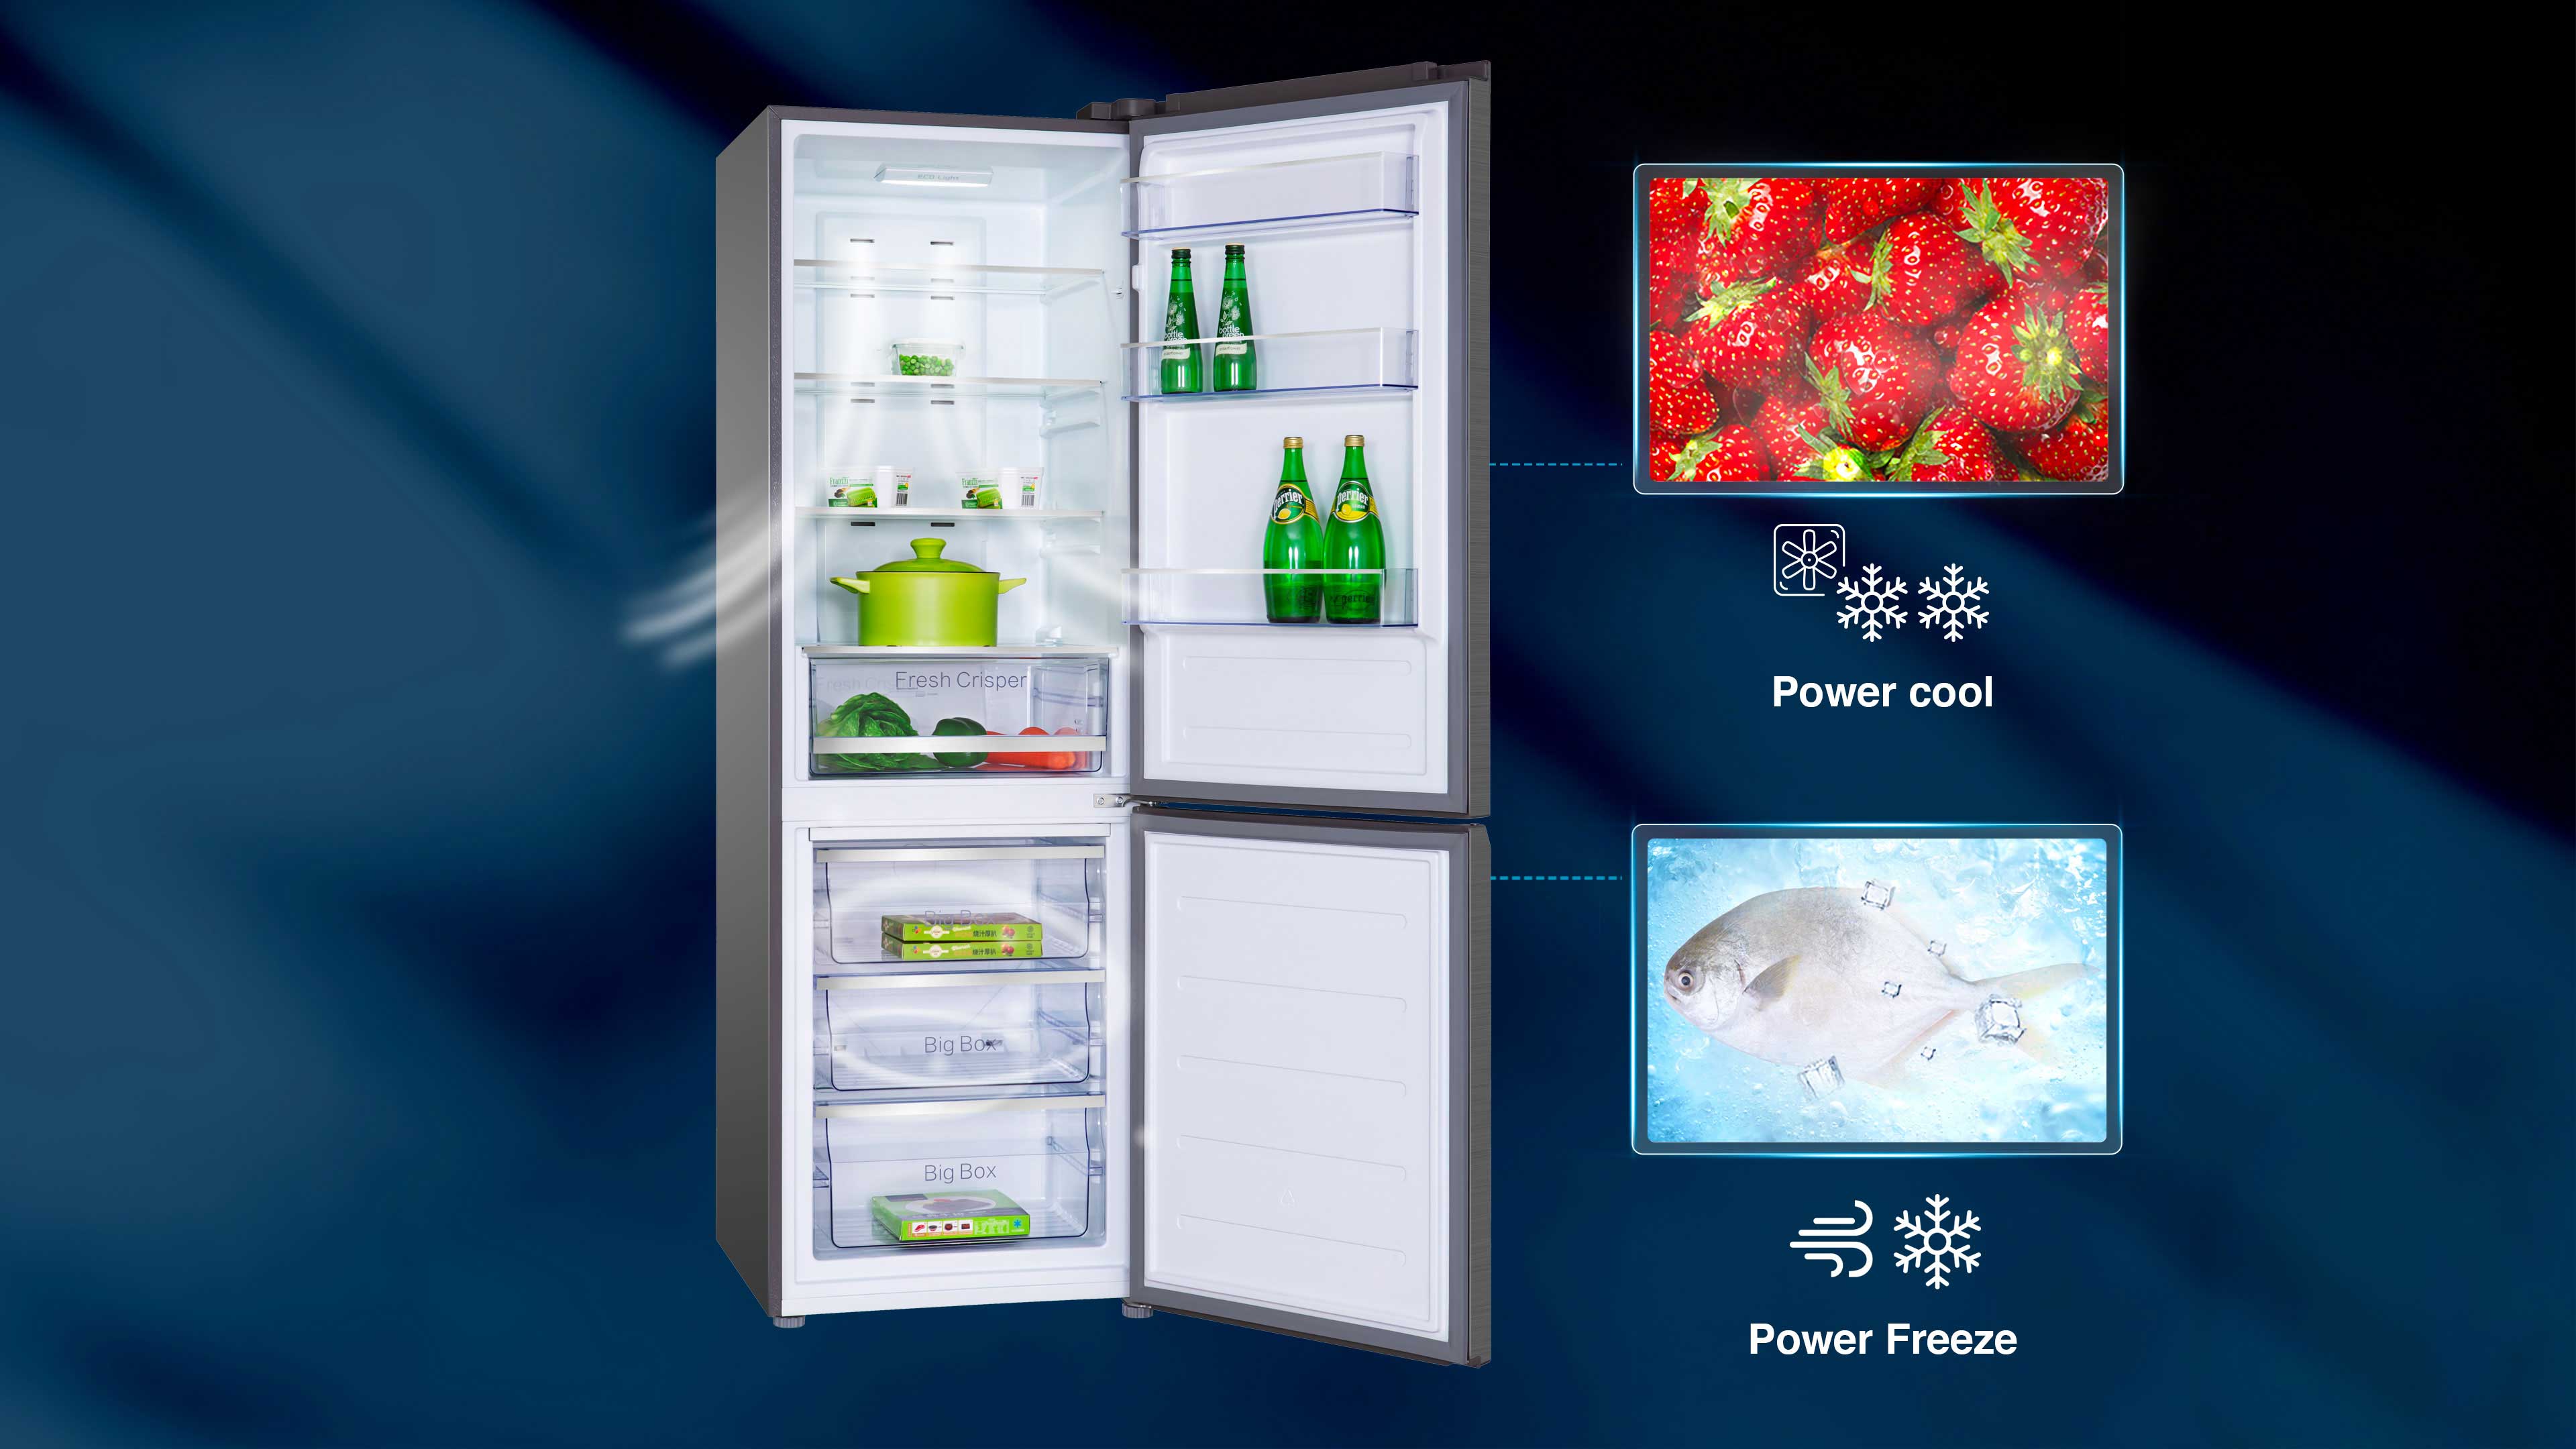 TCL Refrigerators Power Cool